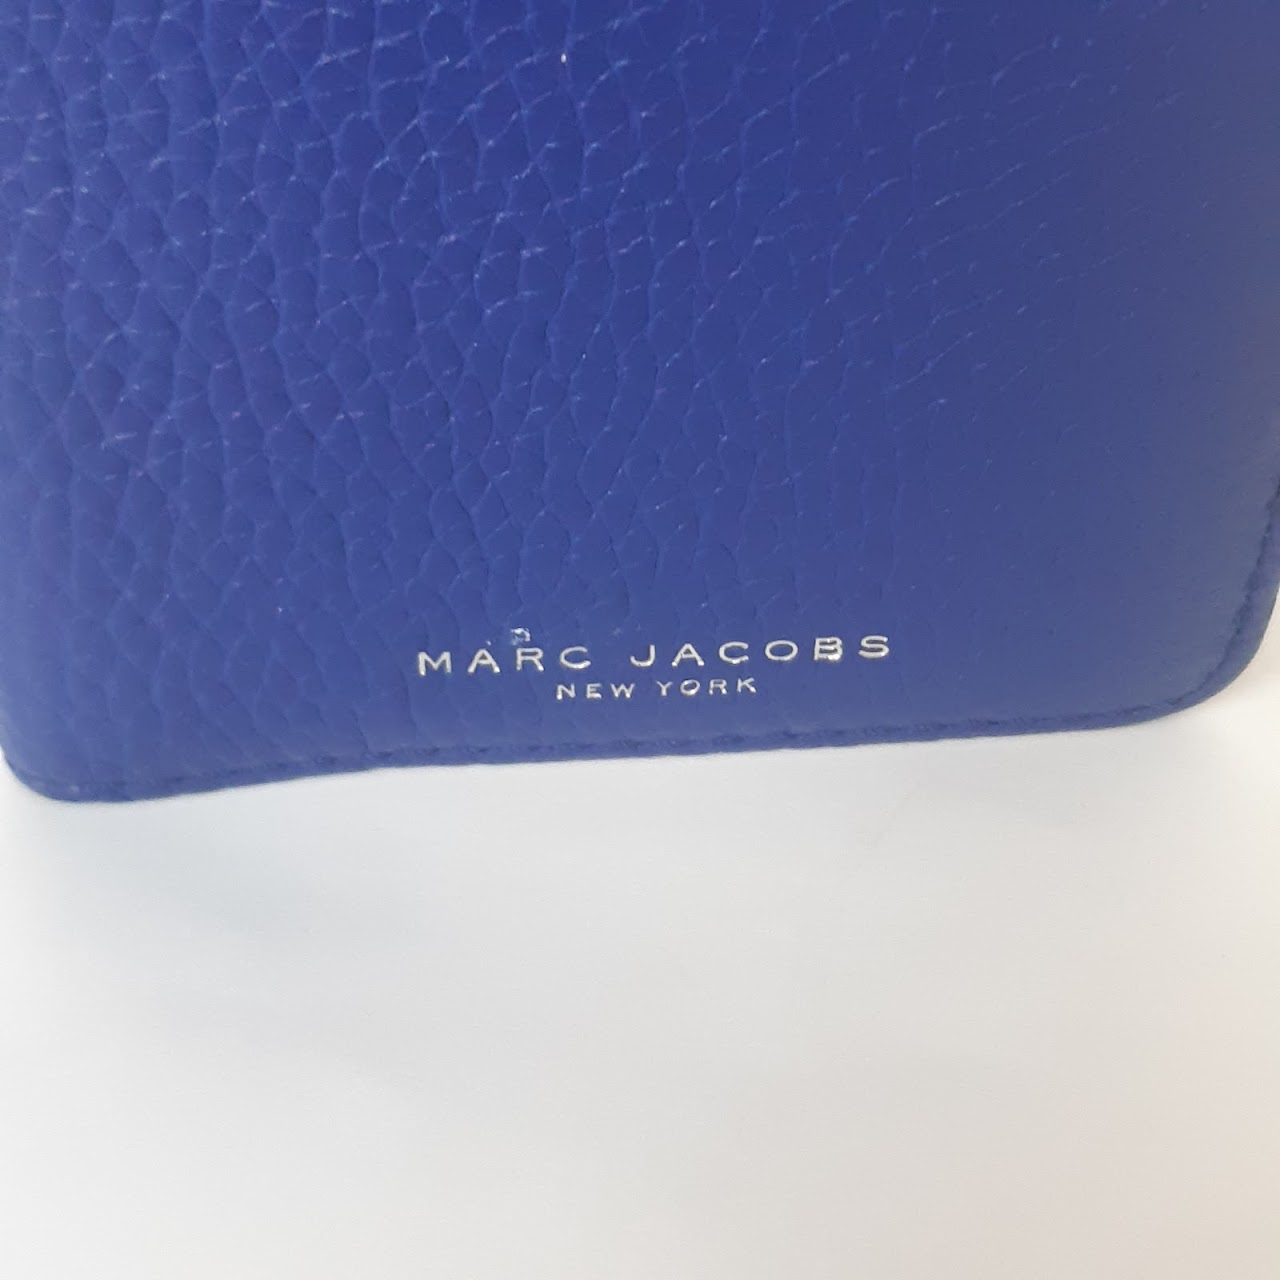 Marc Jacobs Leather Passport Wallet